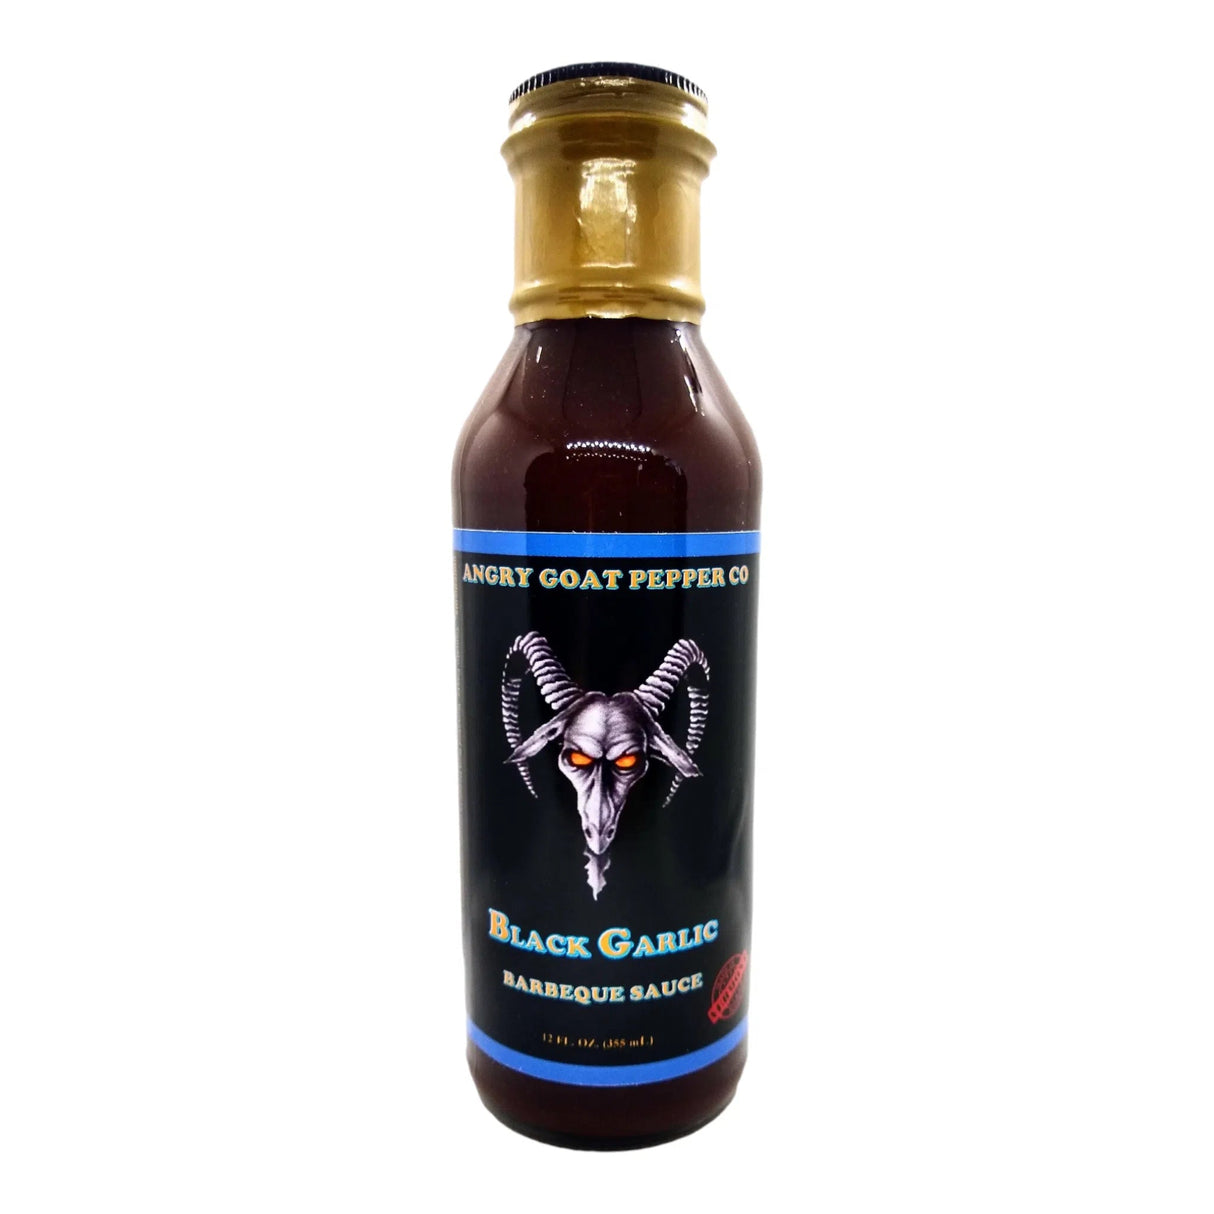 Angry Goat Pepper Co - Black Garlic BBQ Sauce